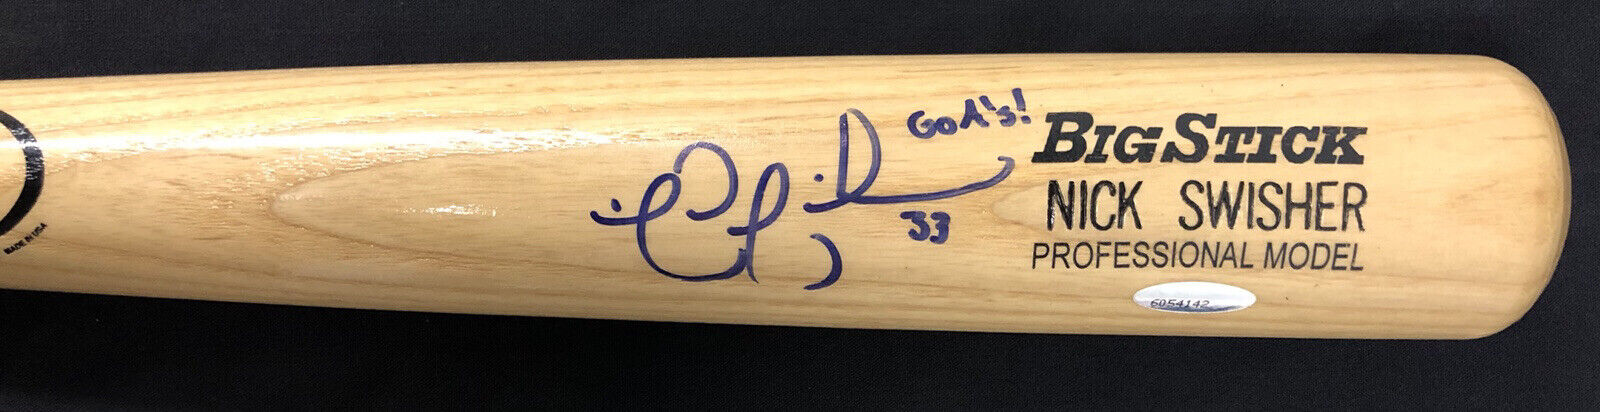 Nick Swisher 33 Oakland Athletics Signed Baseball Bat. Go A’s Tri-Star 6054142